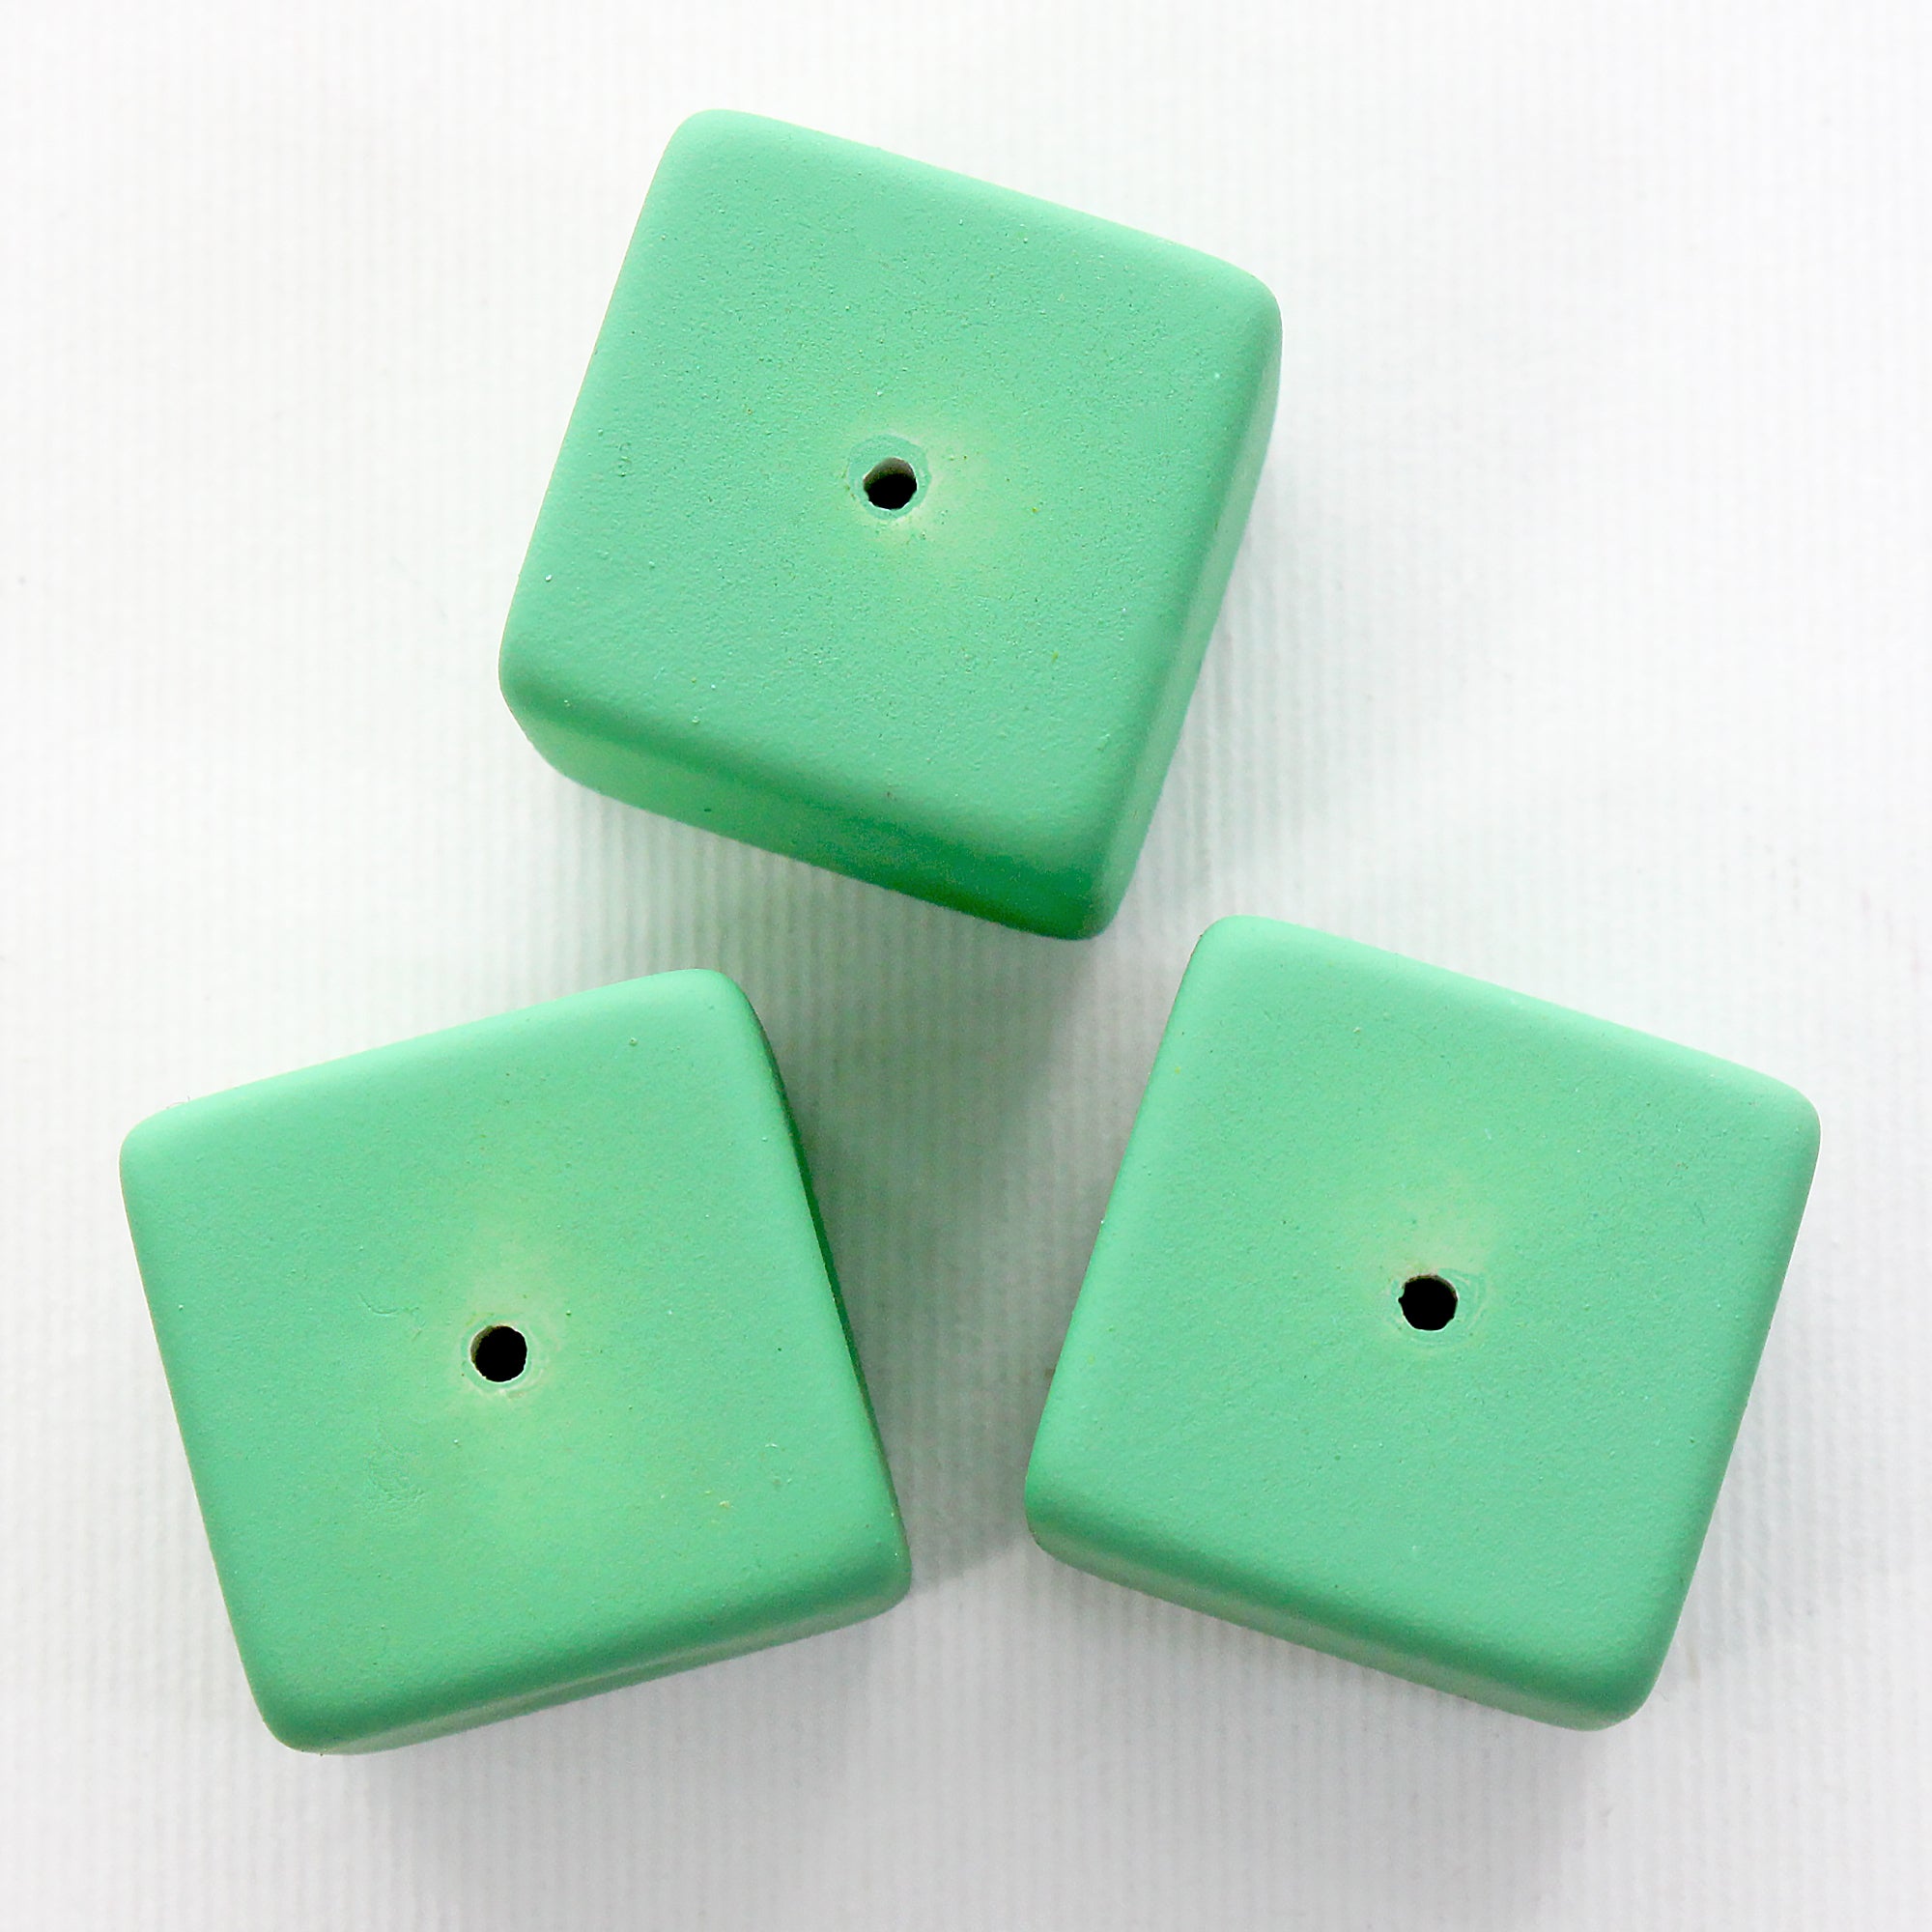 Beads Turquoise Charm Stone Cube 22Mm X 22Mm 30G Pb Ib